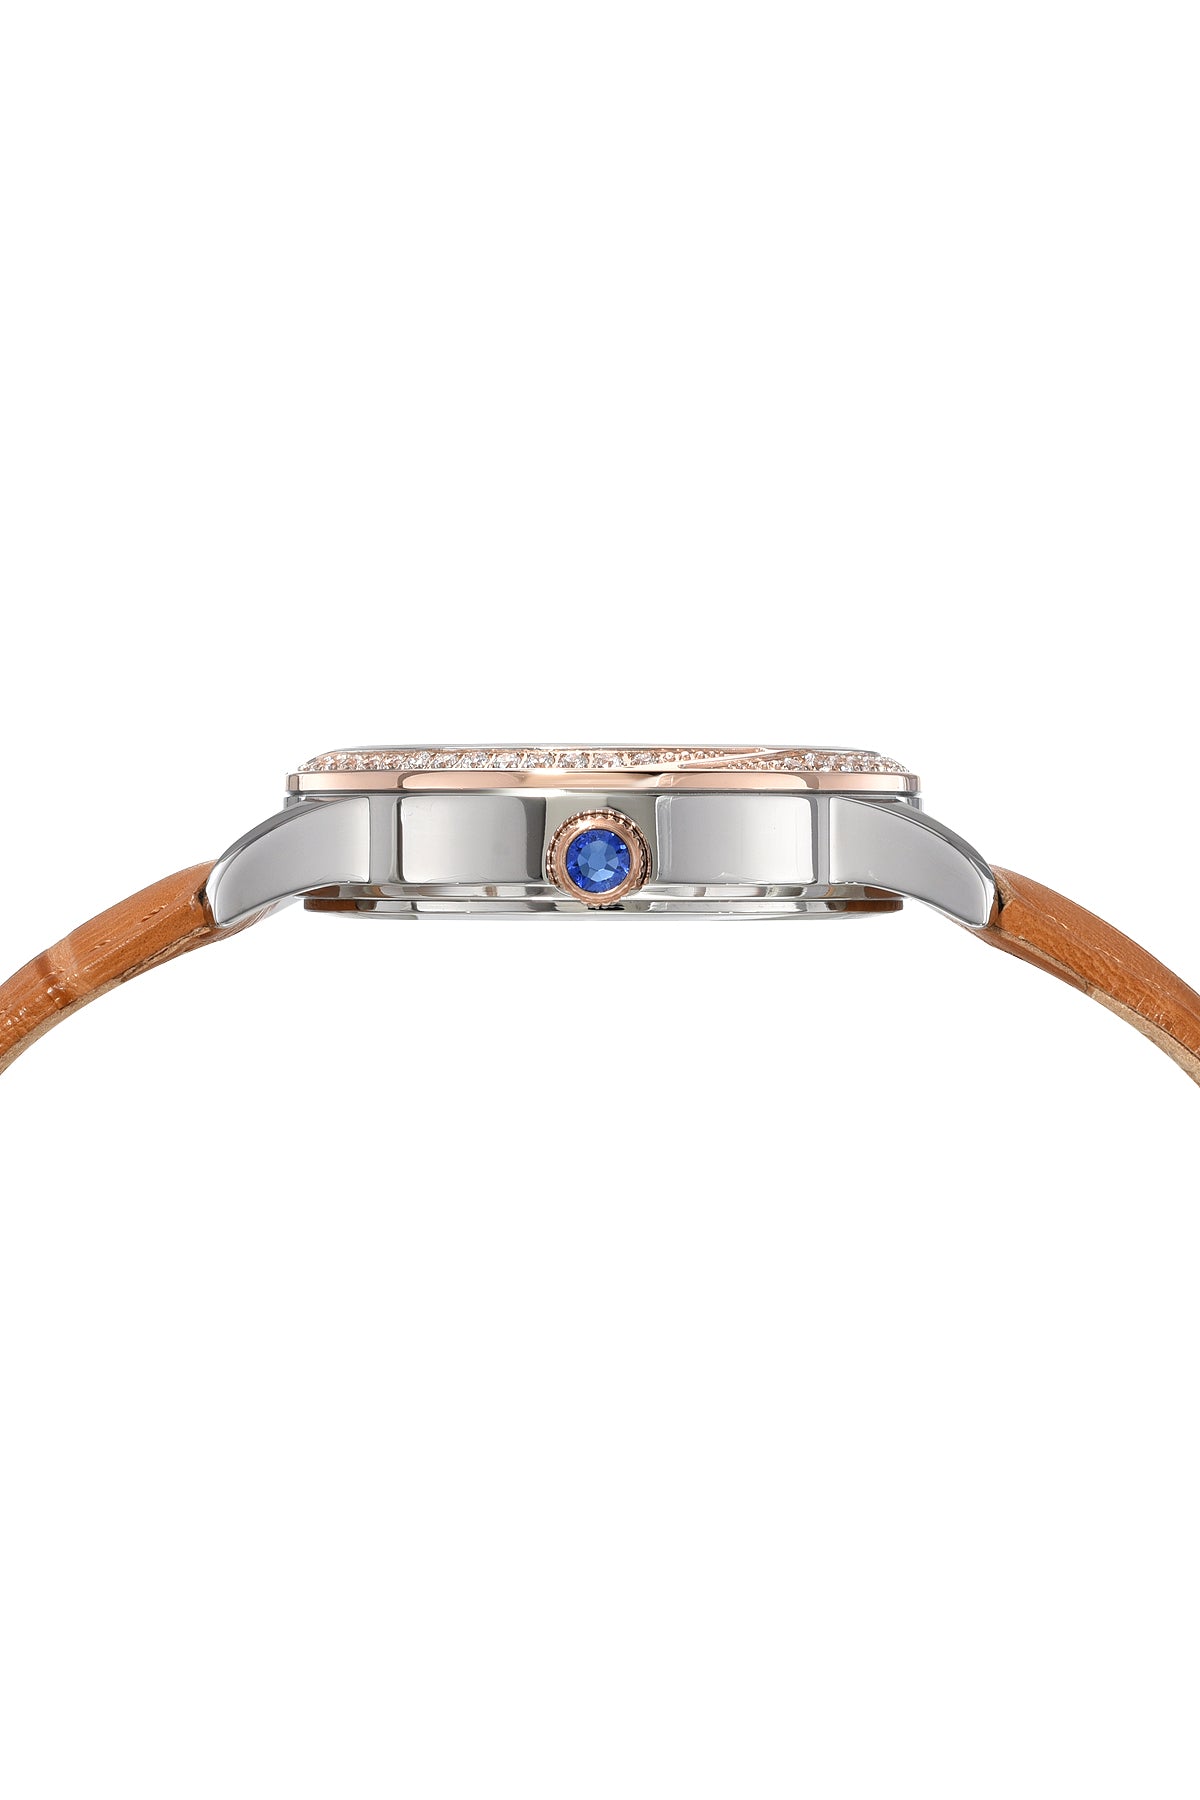 Porsamo Bleu Ruby Luxury Women's Genuine Leather Band Watch, Silver, Rose 1141DRUL